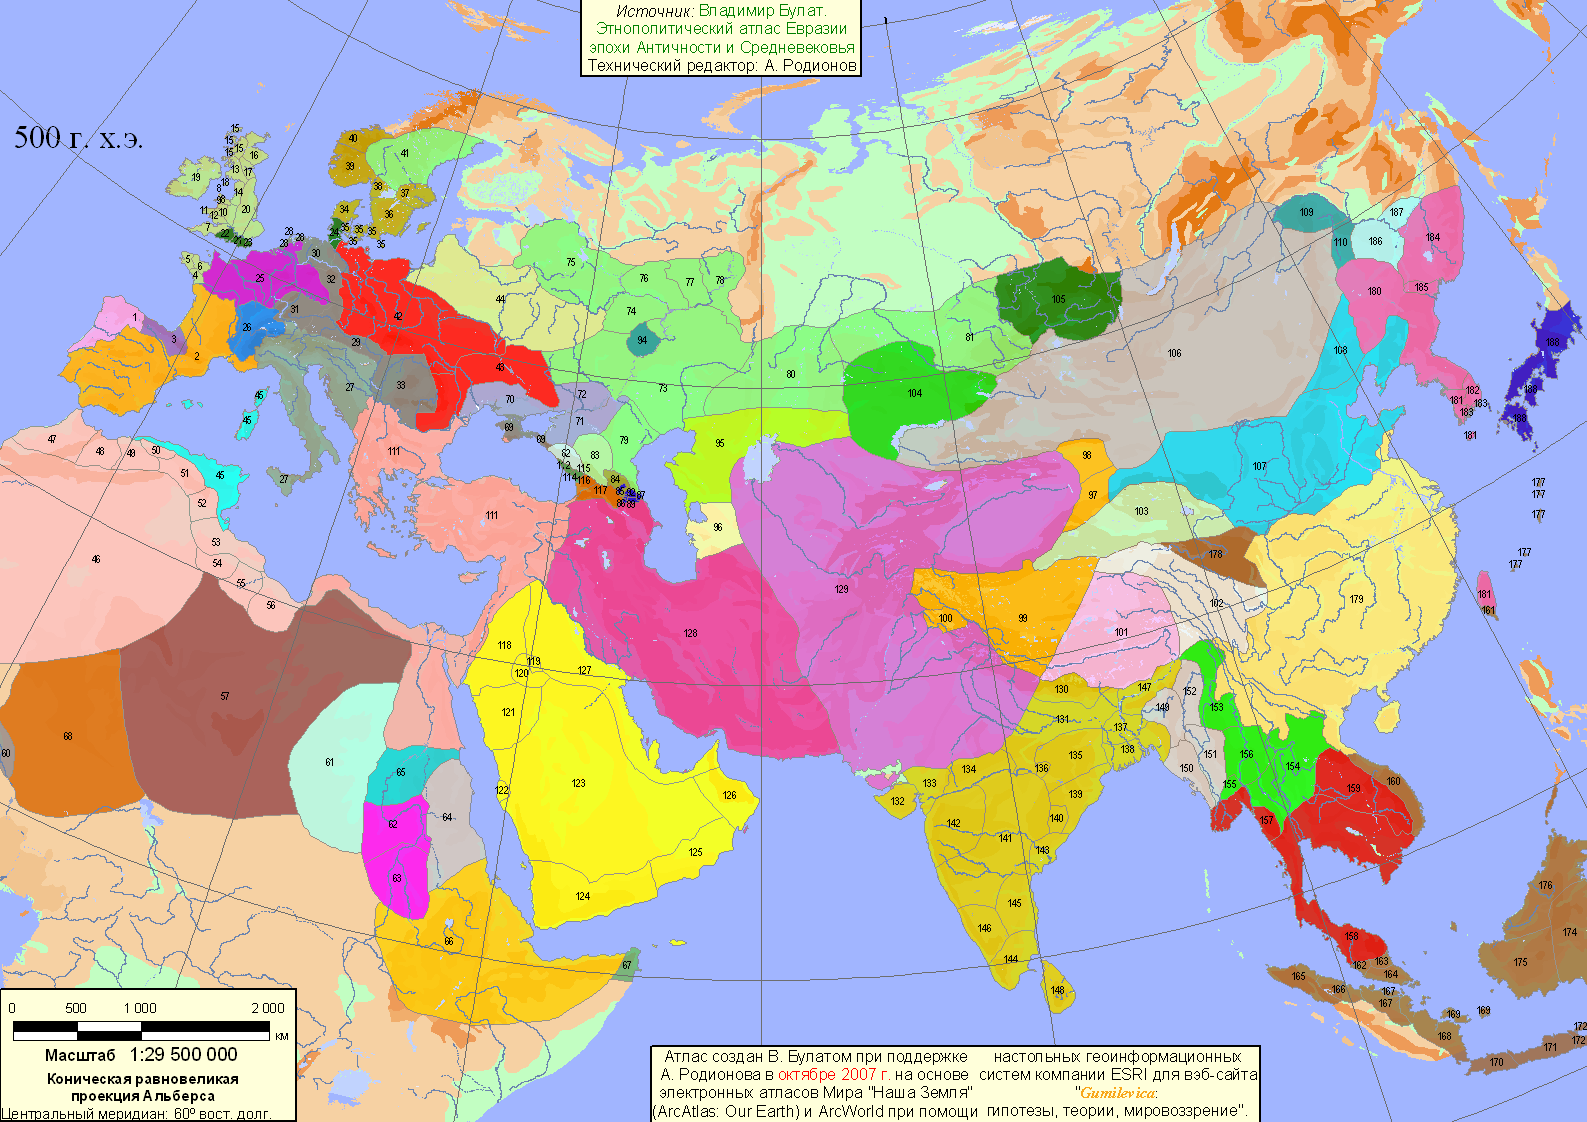 Eurasia - 500 AD (323 Kbytes)